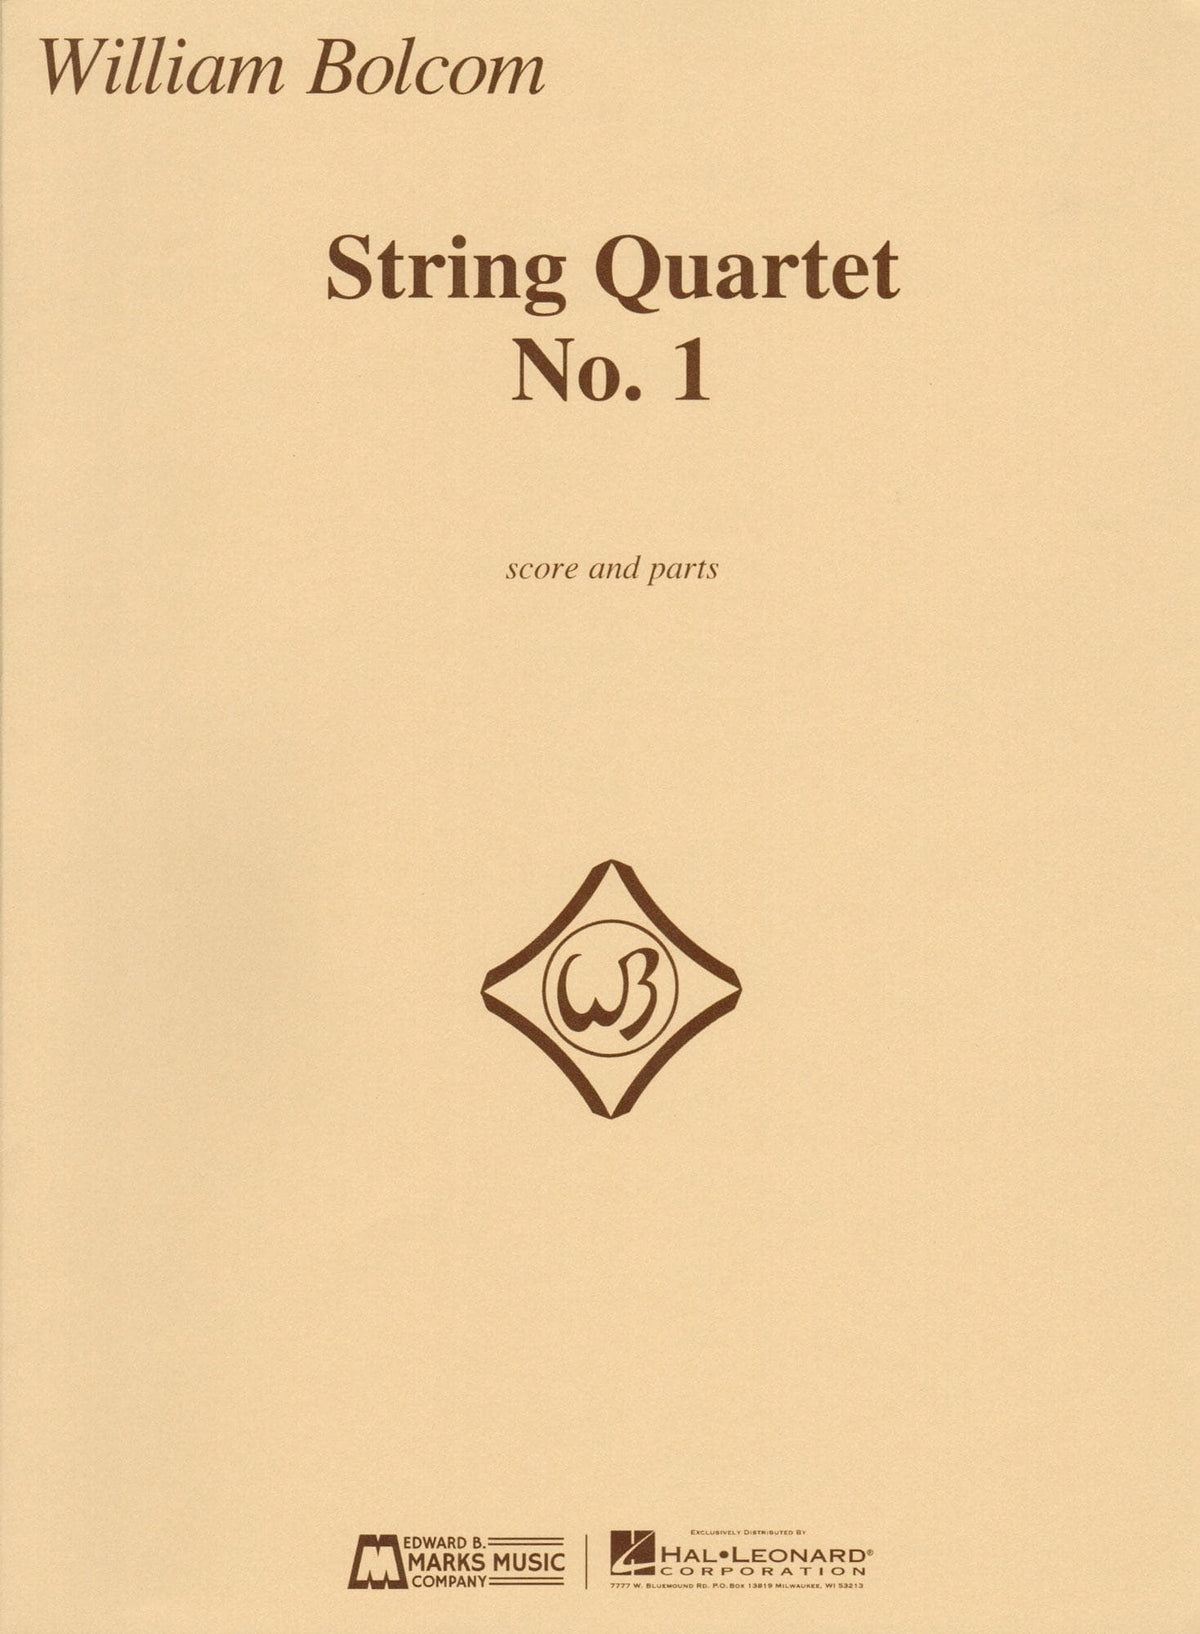 Bolcom, William - String Quartet No. 1 - Score and Parts - Edward B. Marks Music Company